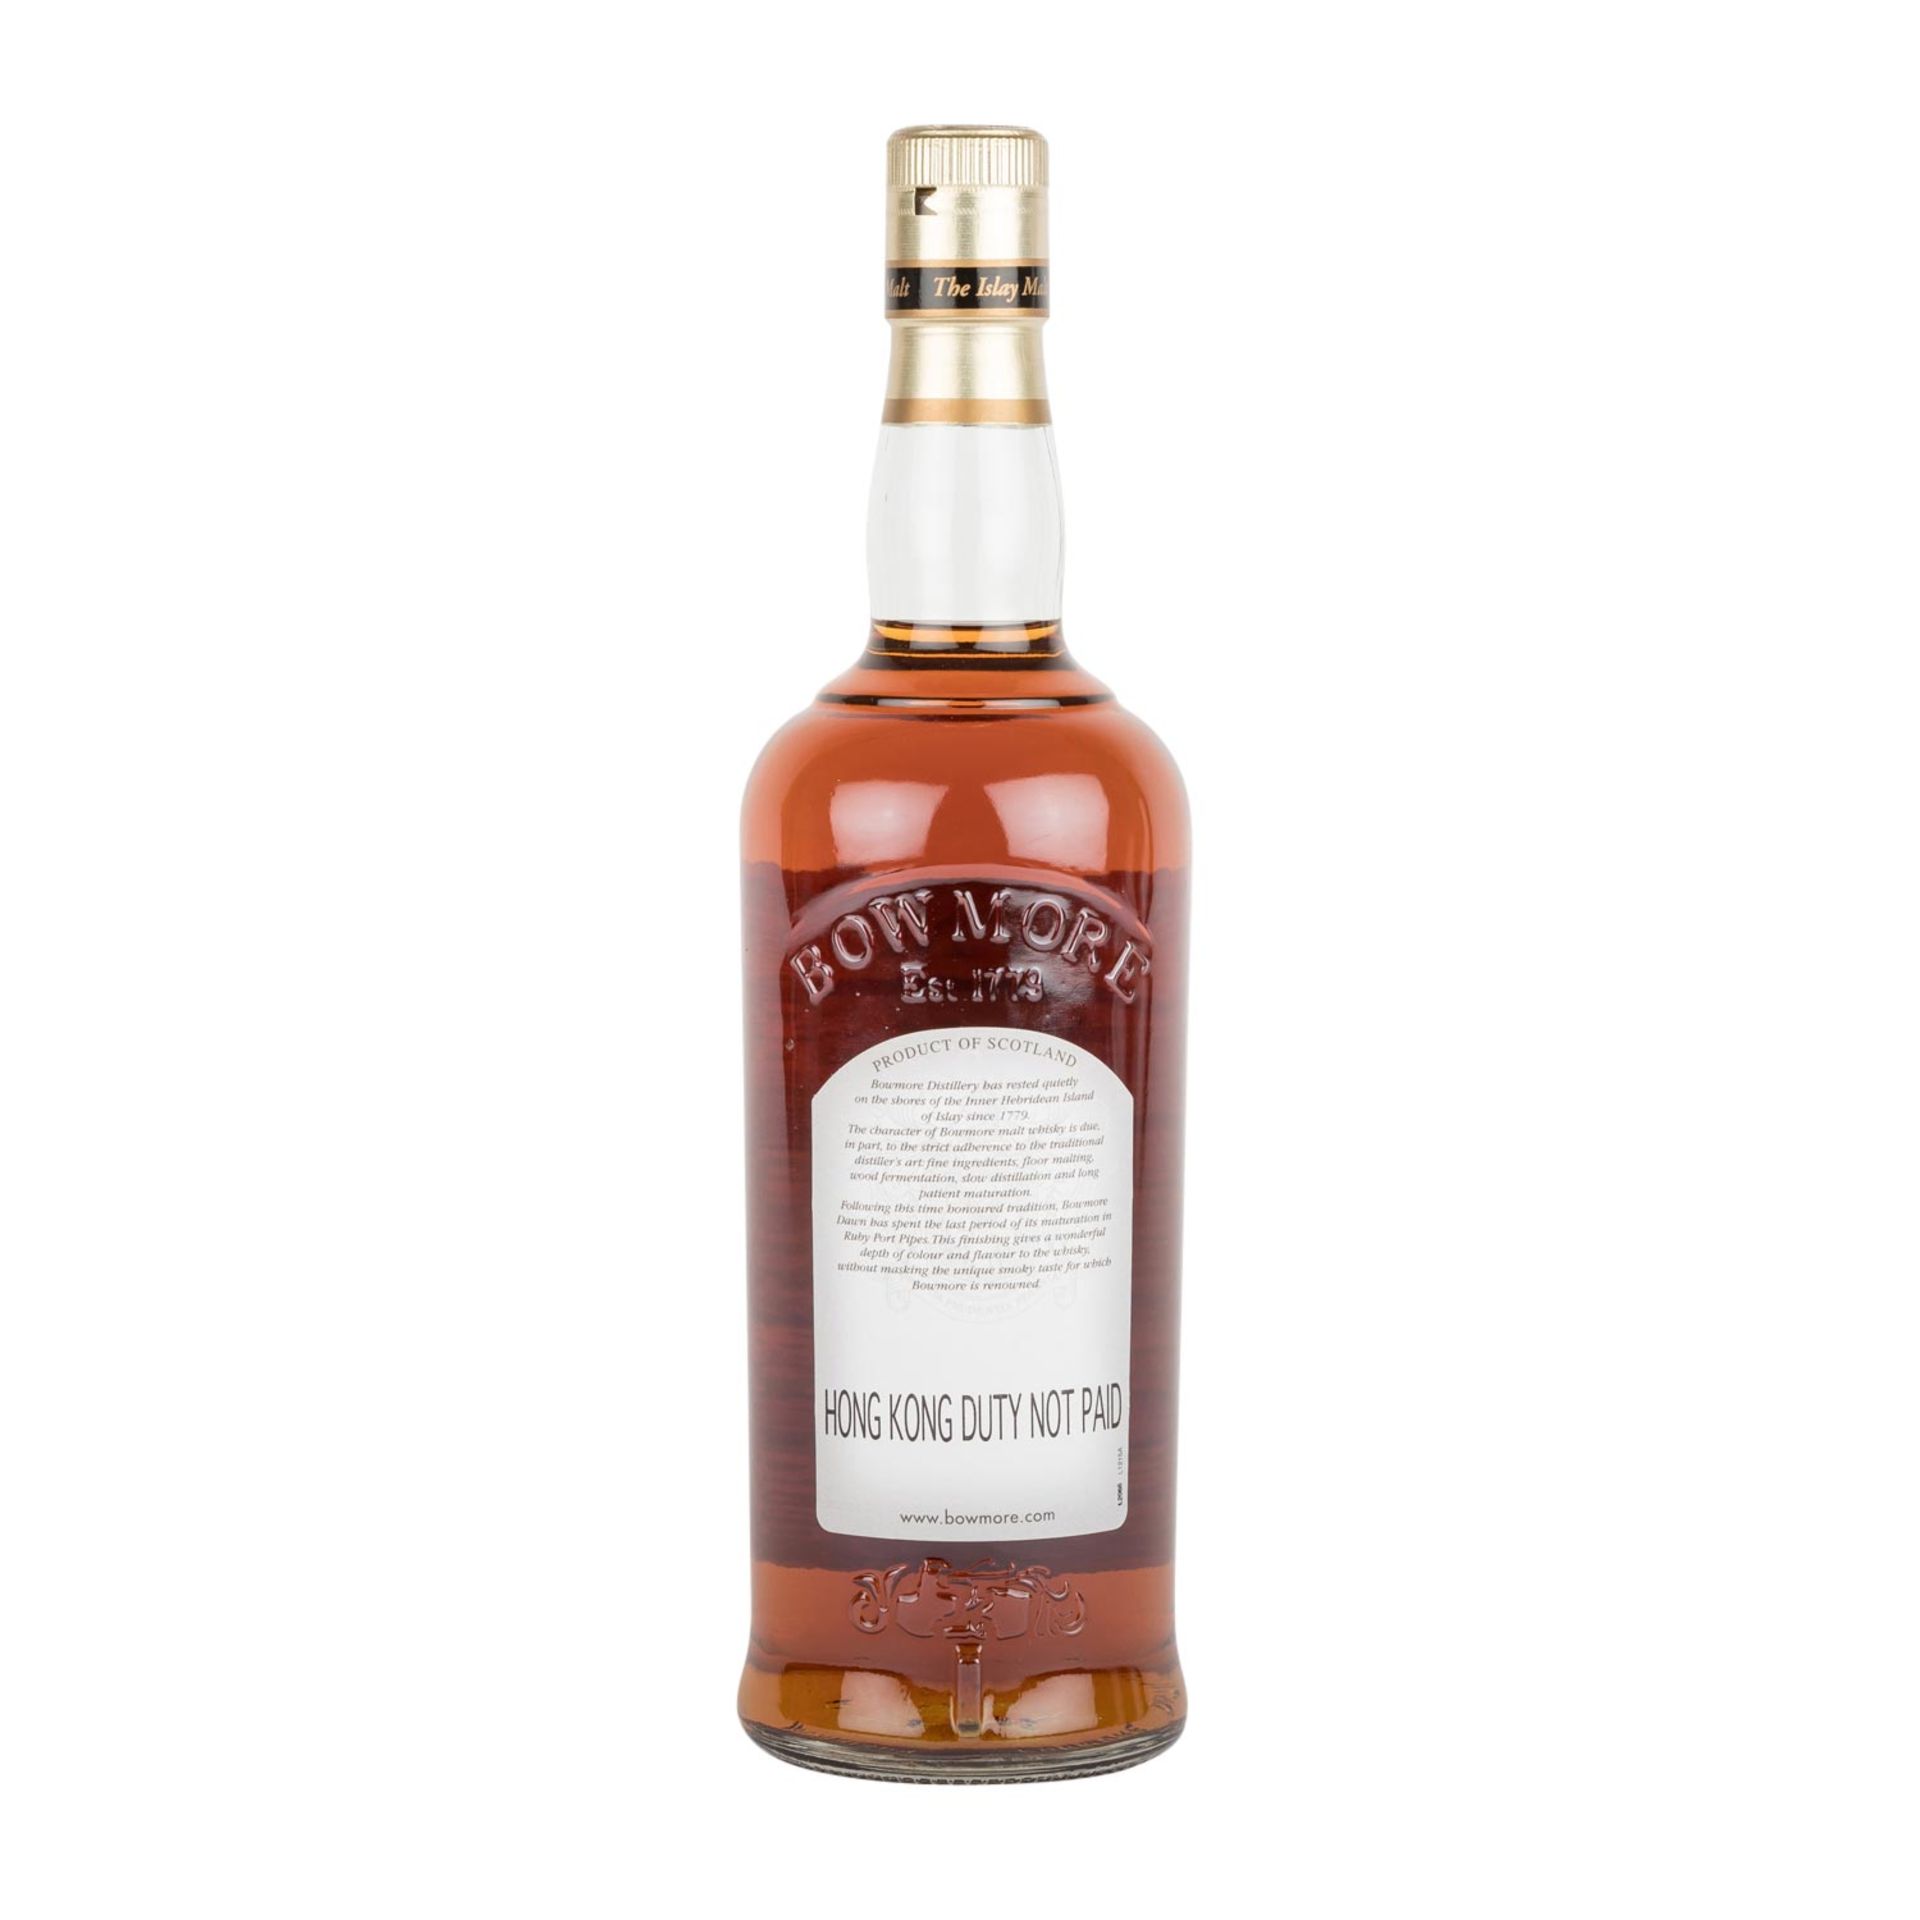 BOWMORE Single Malt Scotch Whisky 'DAWN' Ruby Port Cask - Image 3 of 5